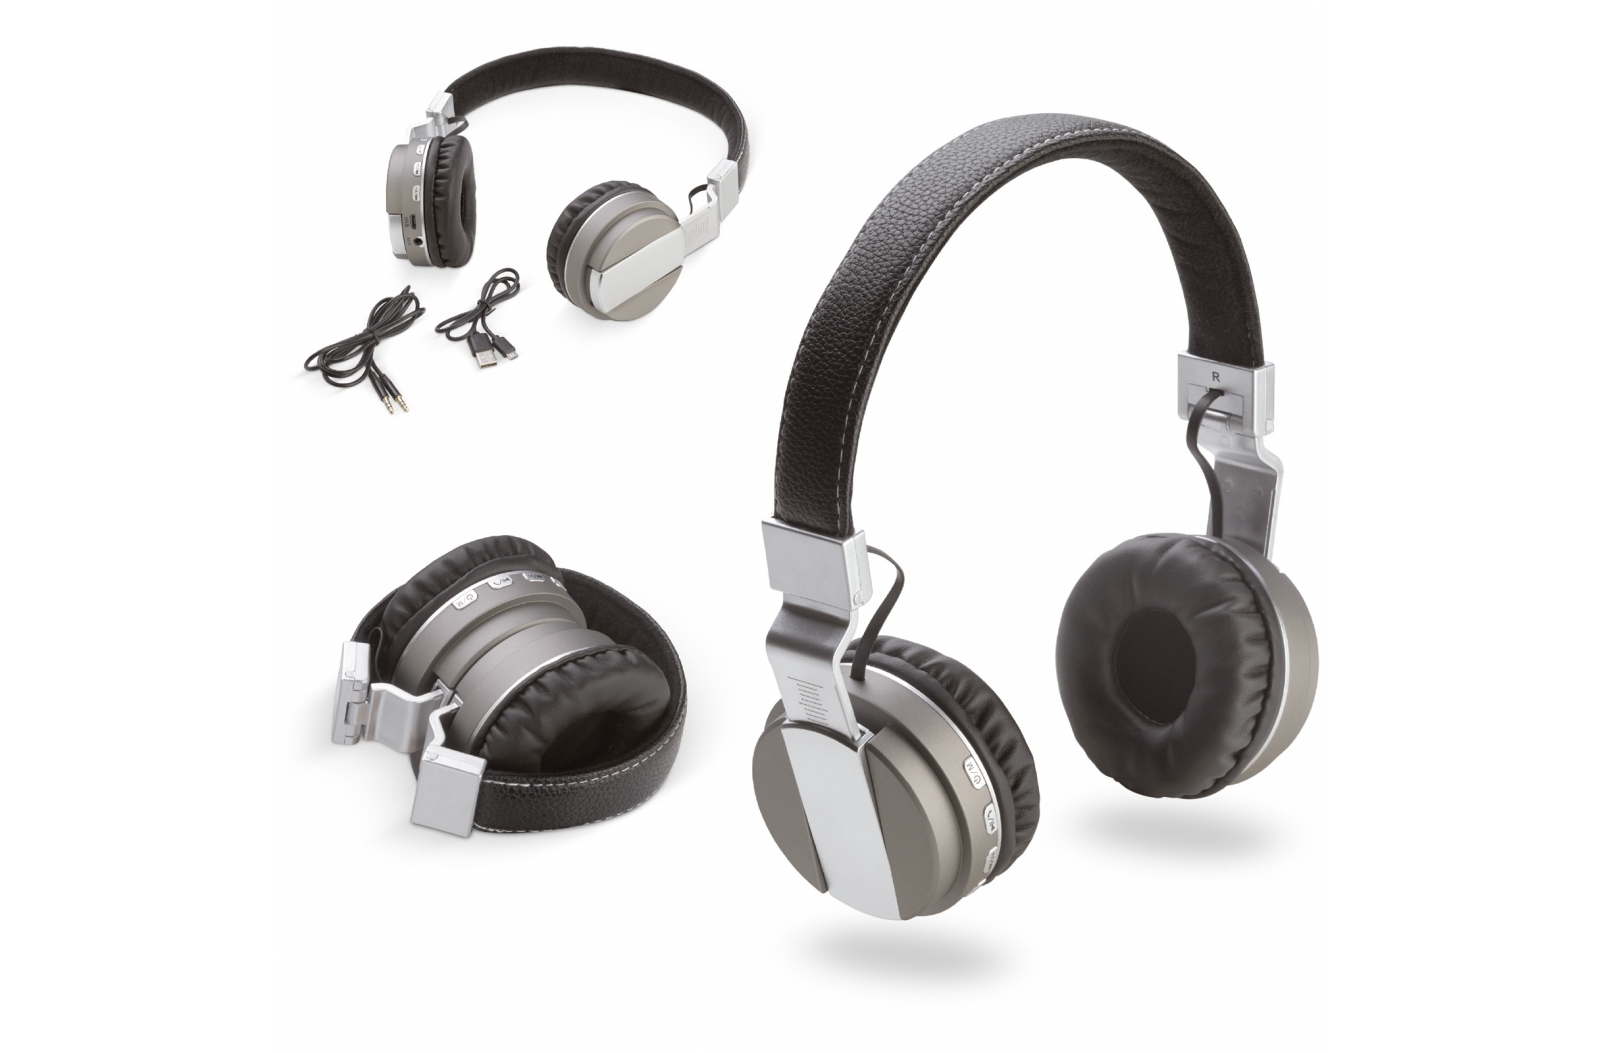 G50 Wireless Foldable Headphones - Headbourne Worthy